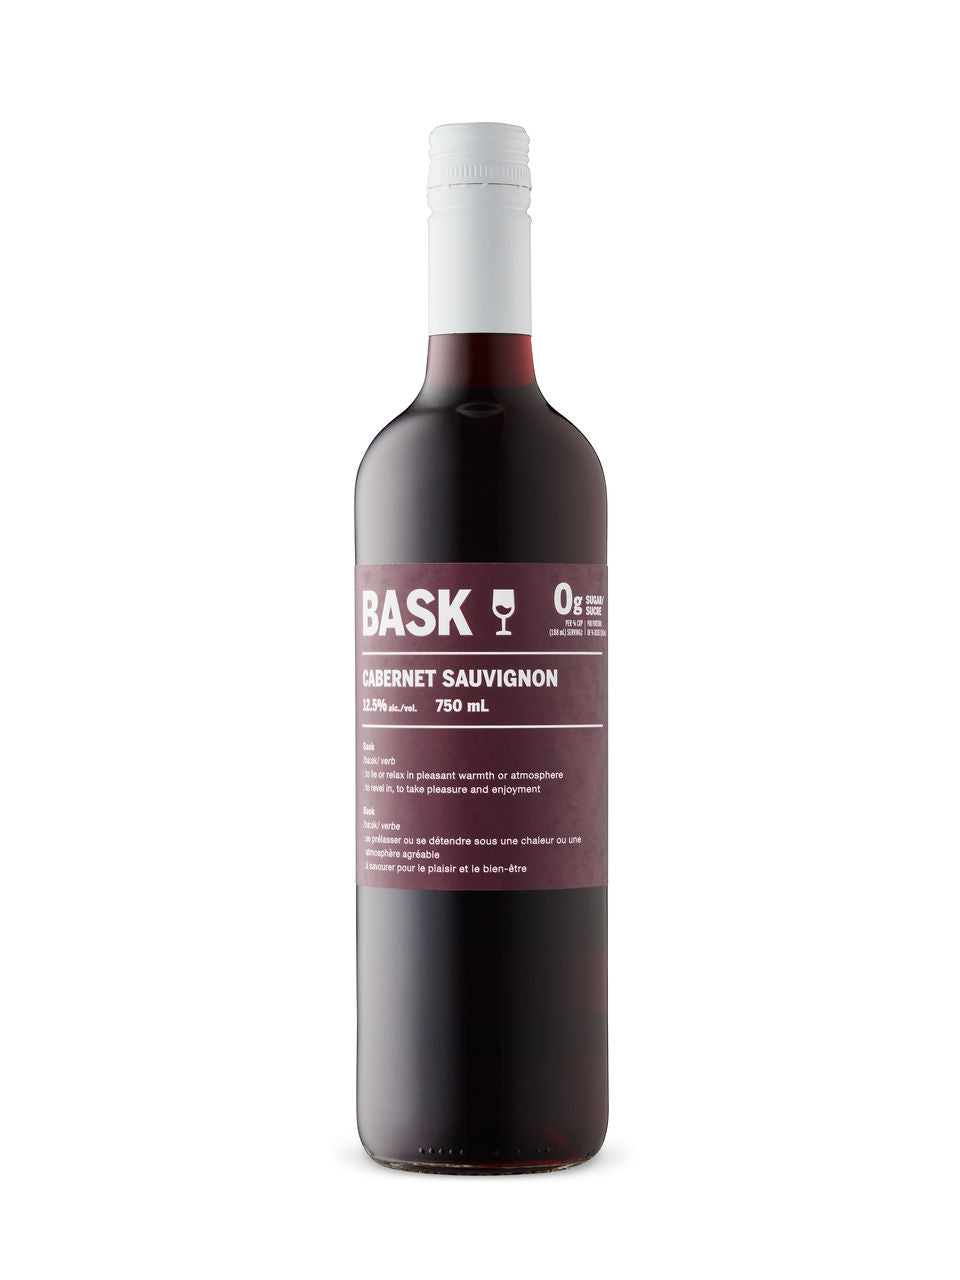 Bask Cabernet Sauvignon 750 ml bottle